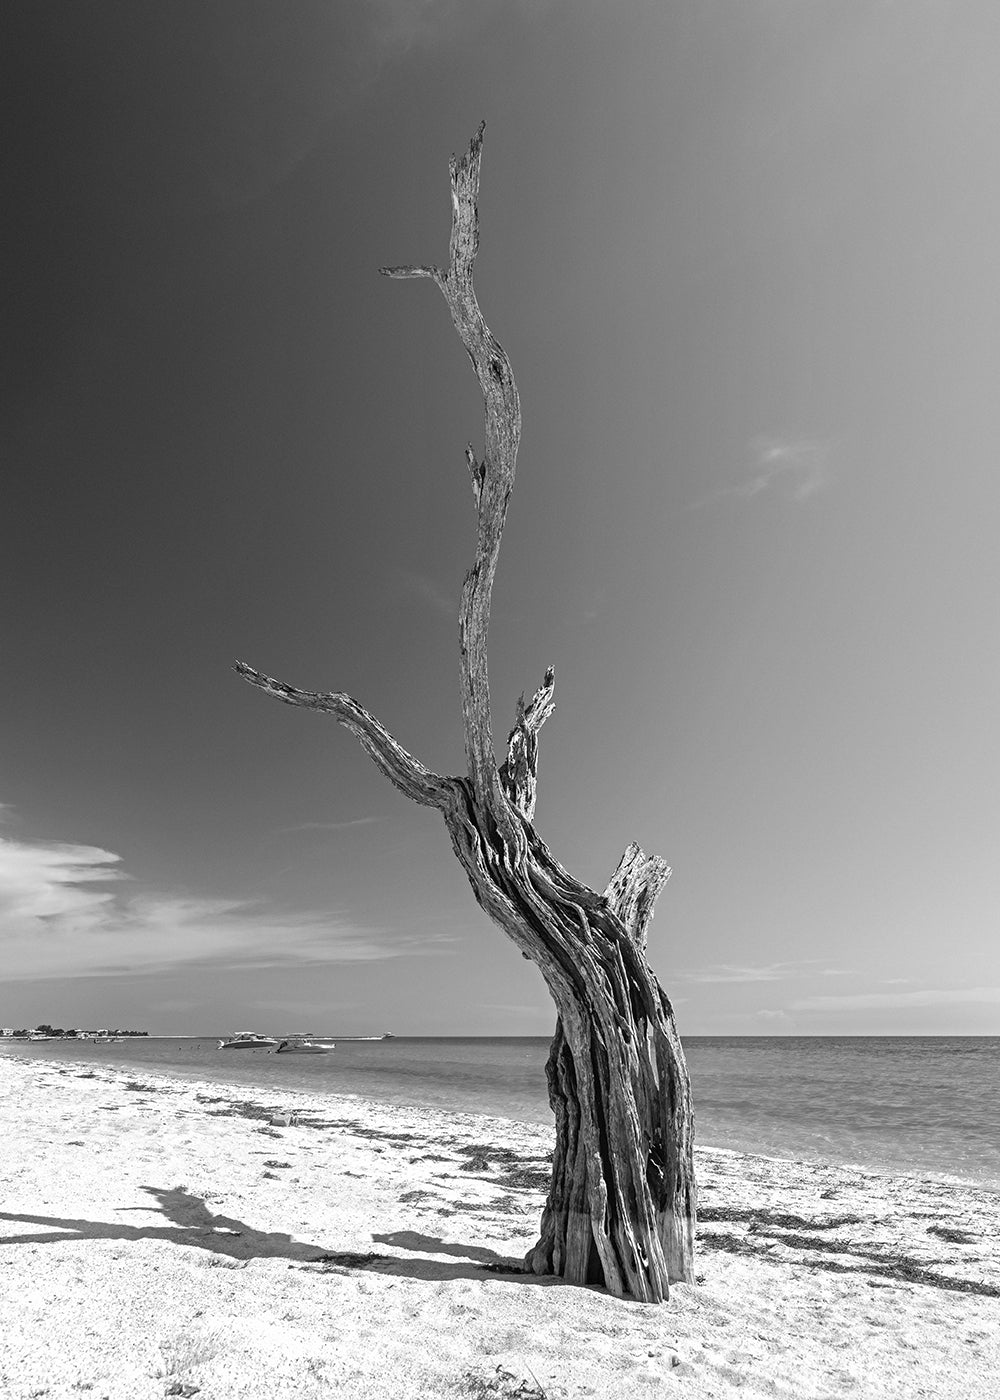 Lone tree on an island lining the coastal waters